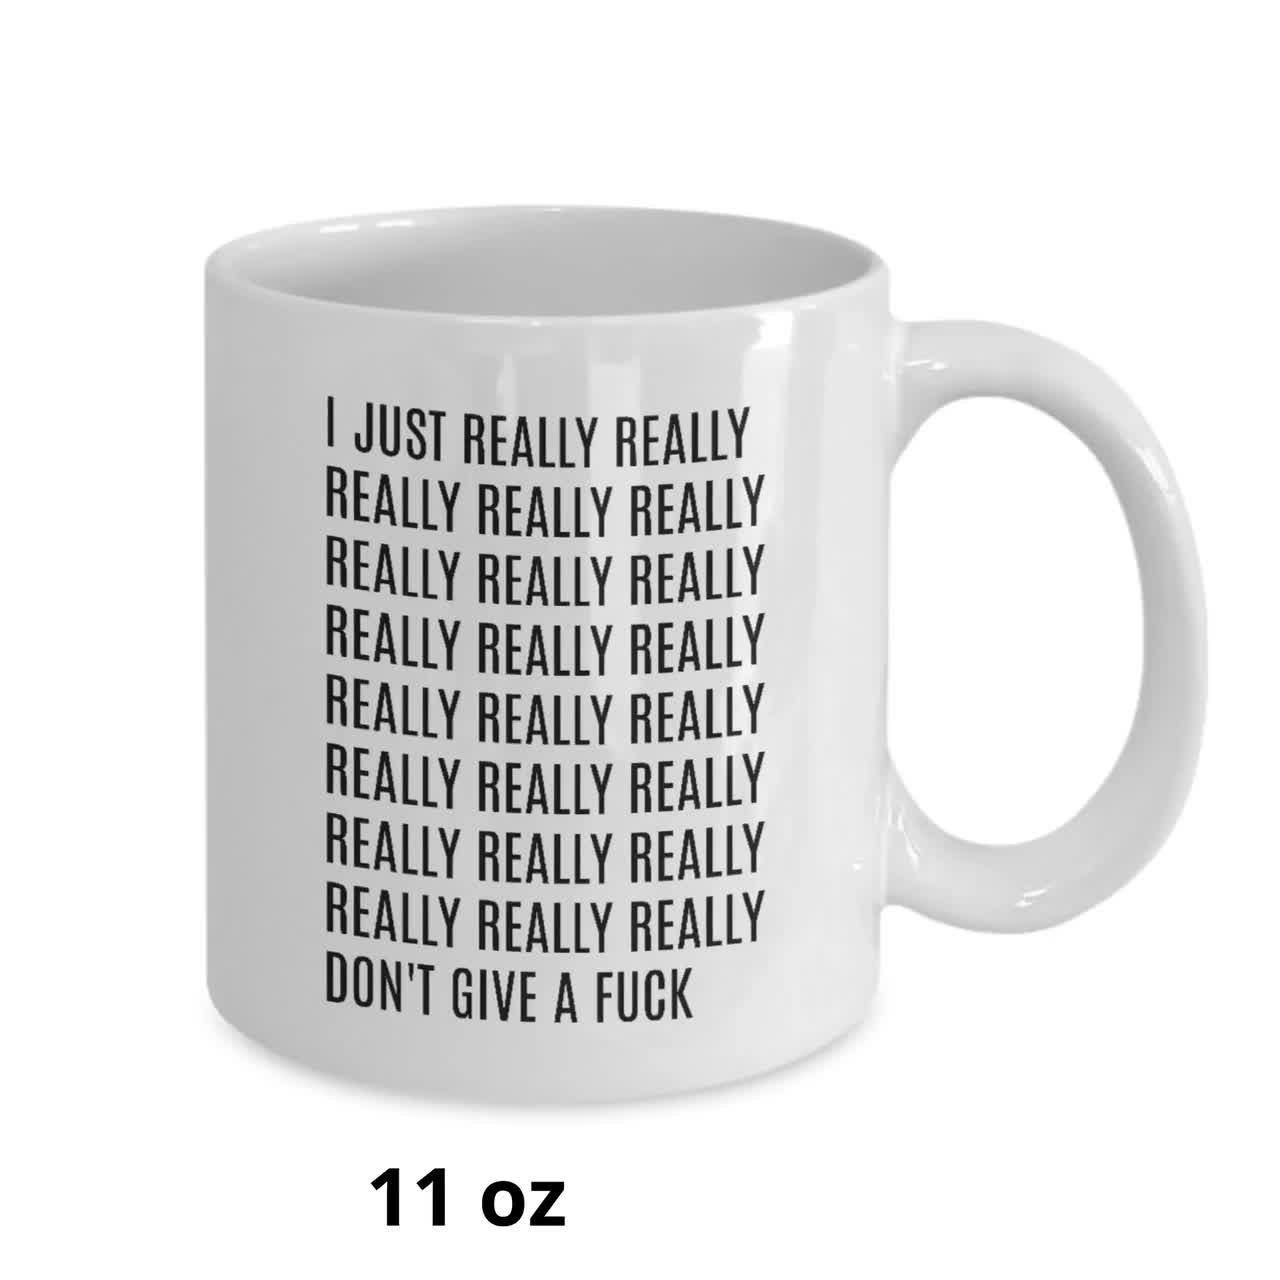 I Don't Give A F**k F**k Funny Mug Rude Offensive Mug Coffee Joke Novelty Gift 